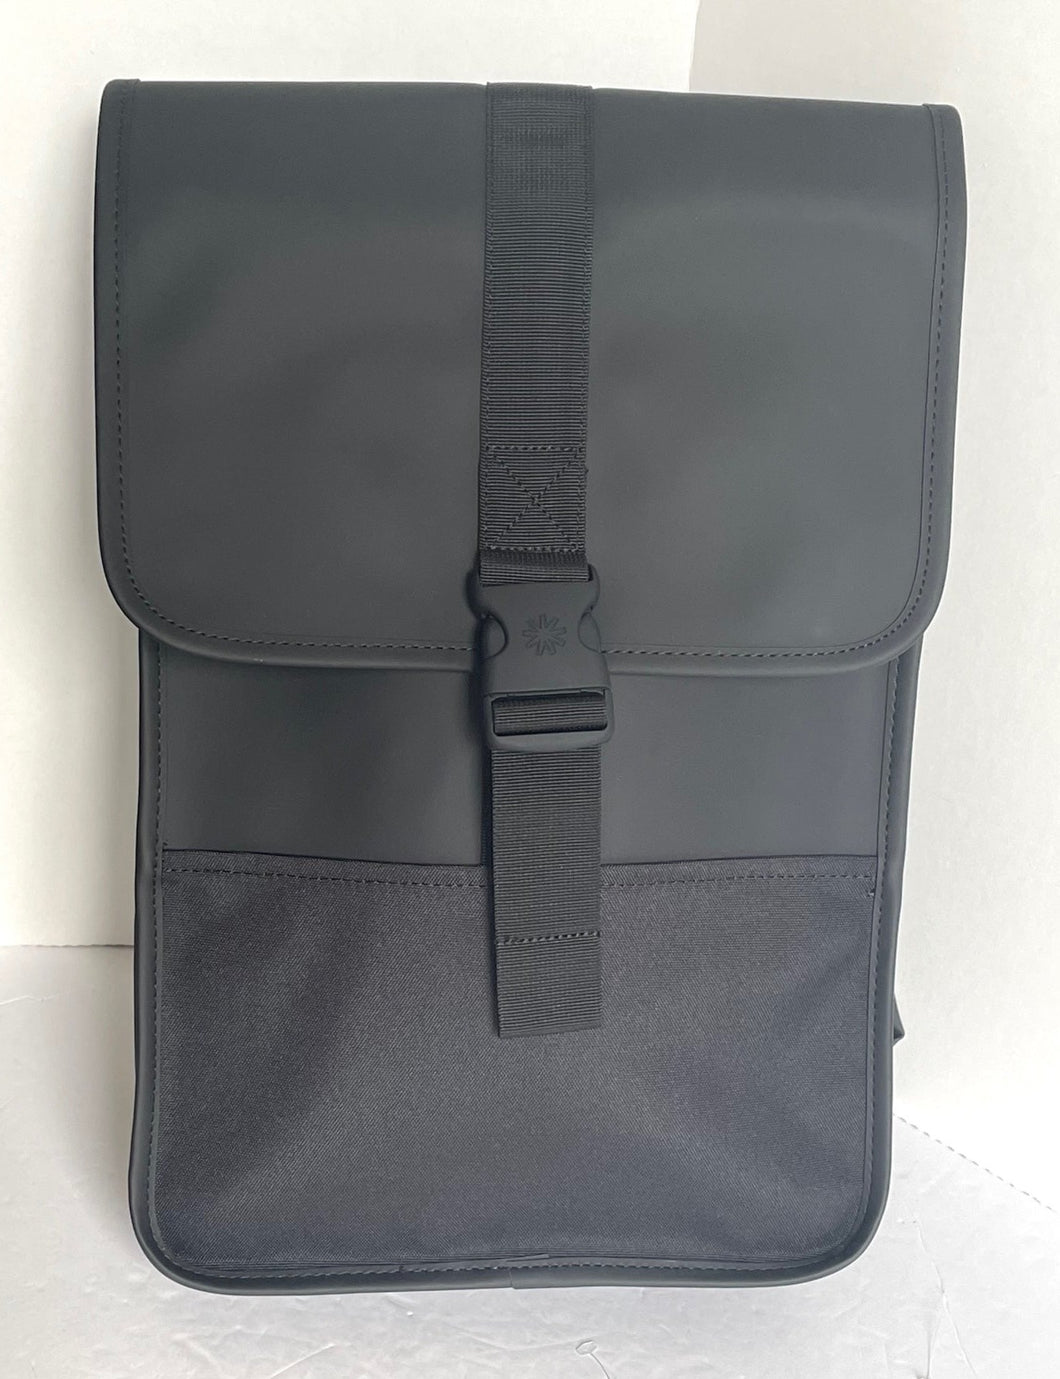 RAINS Buckle Mini Backpack Waterproof Black Laptop Sleeve Vegan Adjustable Unisex